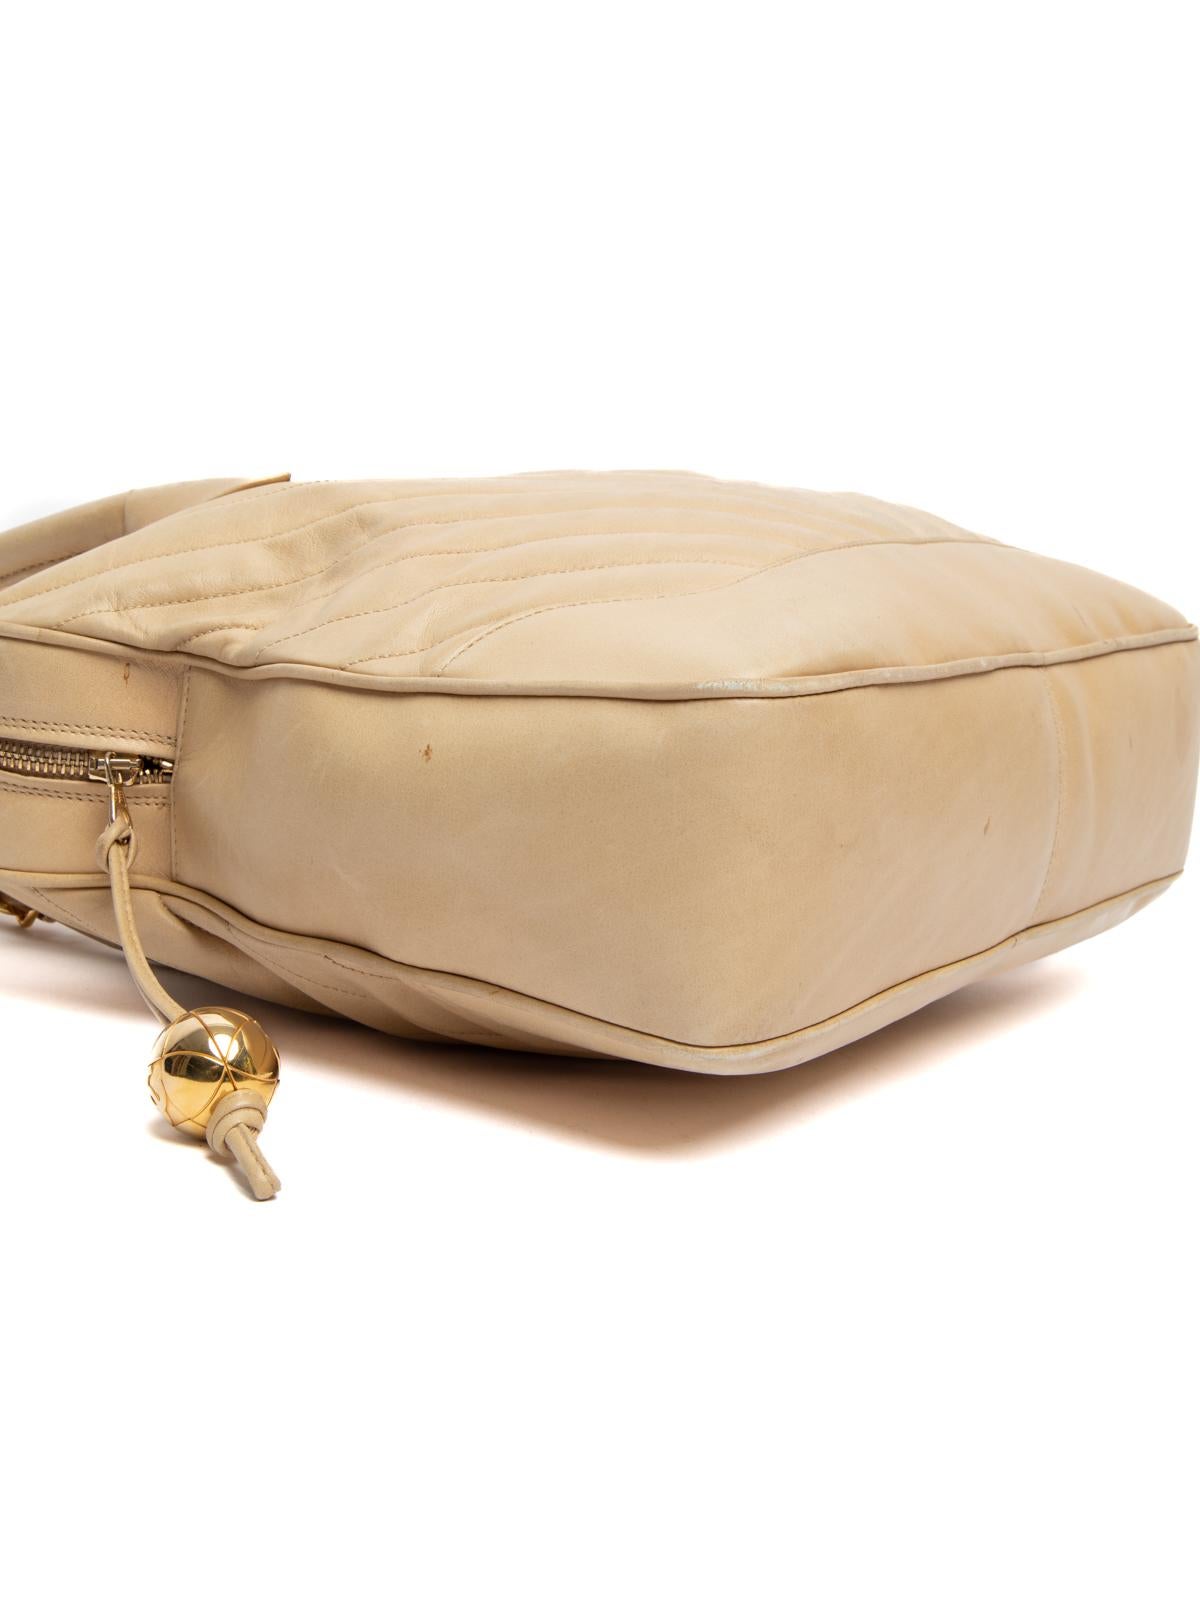 Chanel Women's Vintage Chevron Gold Hardware Top Handle Bag Beige 1